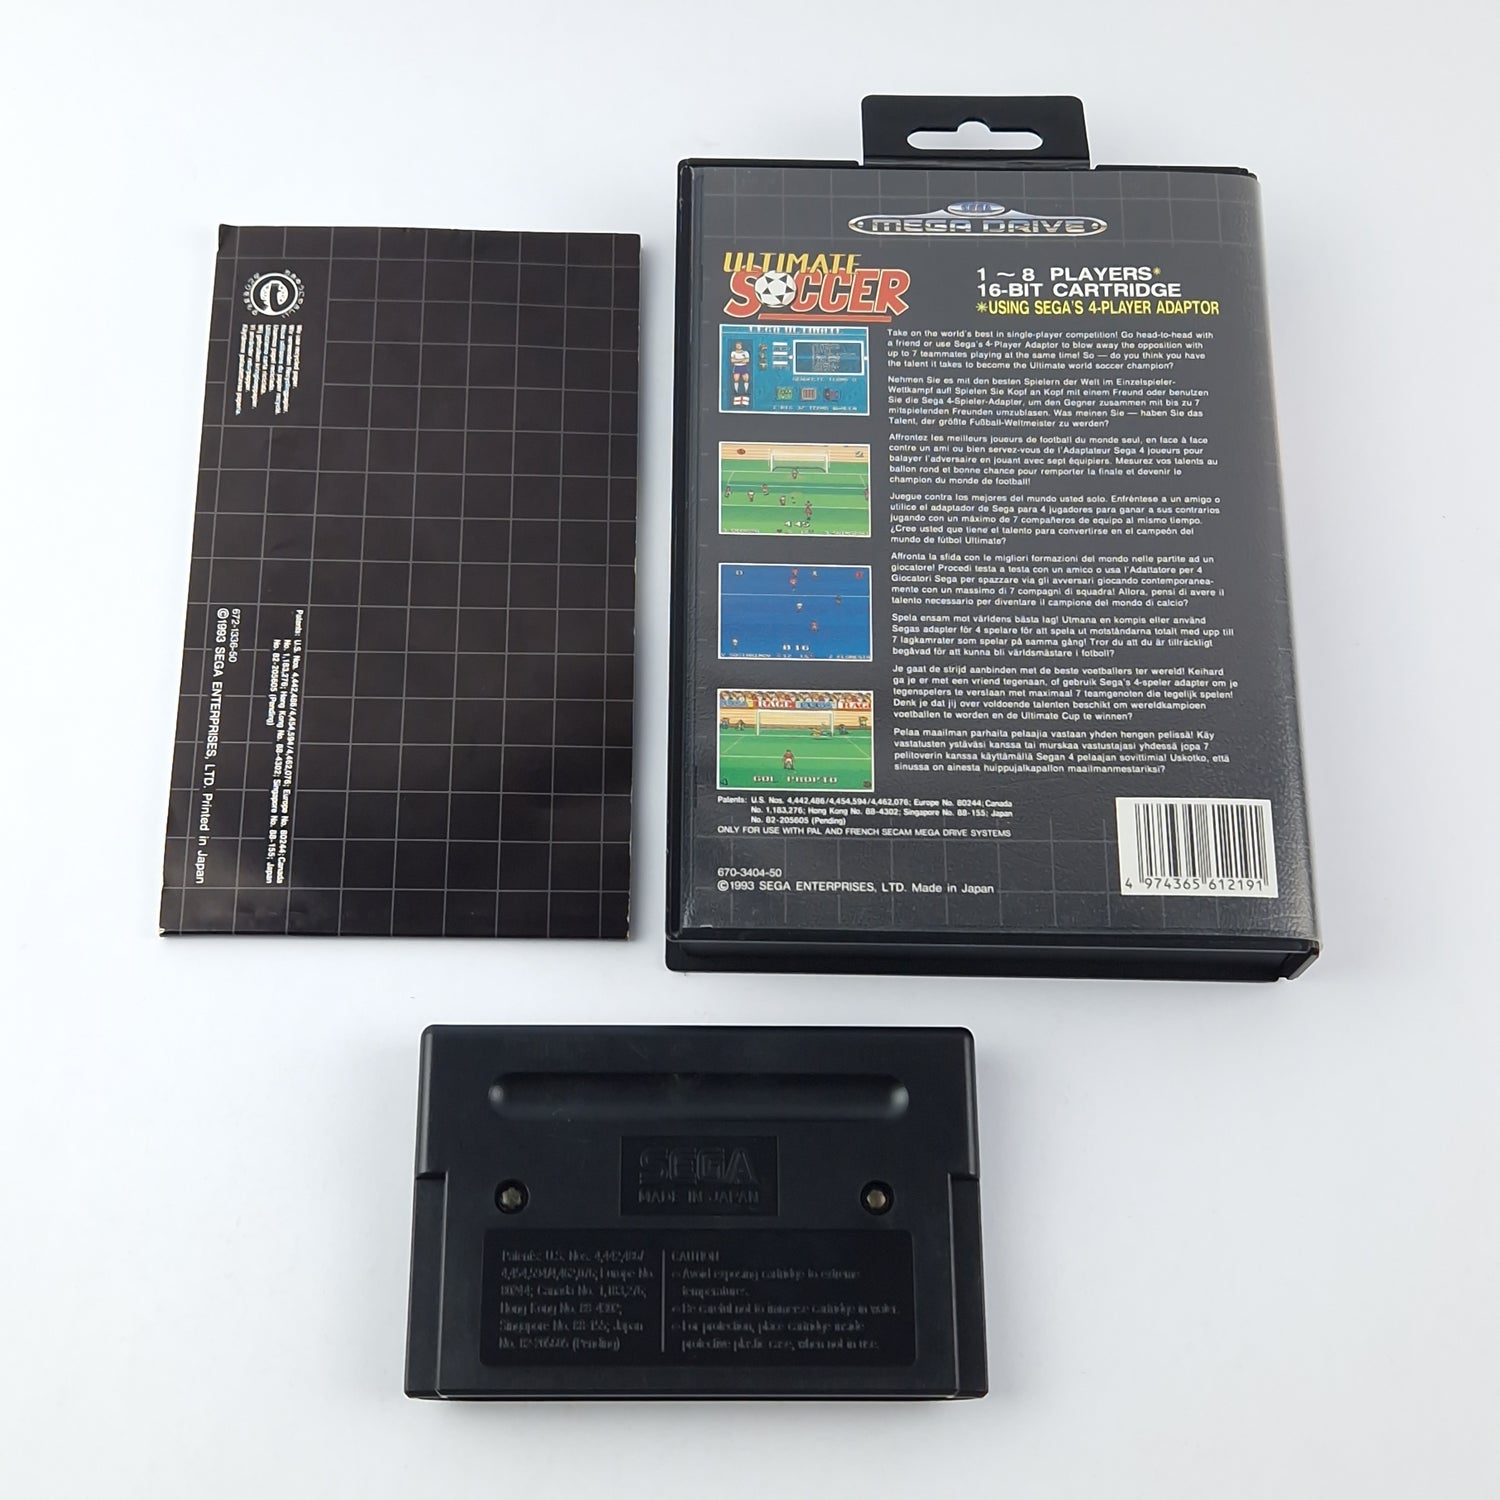 Sega Mega Drive Game: Ultimate Soccer - OVP Instructions Module | 16-bit football